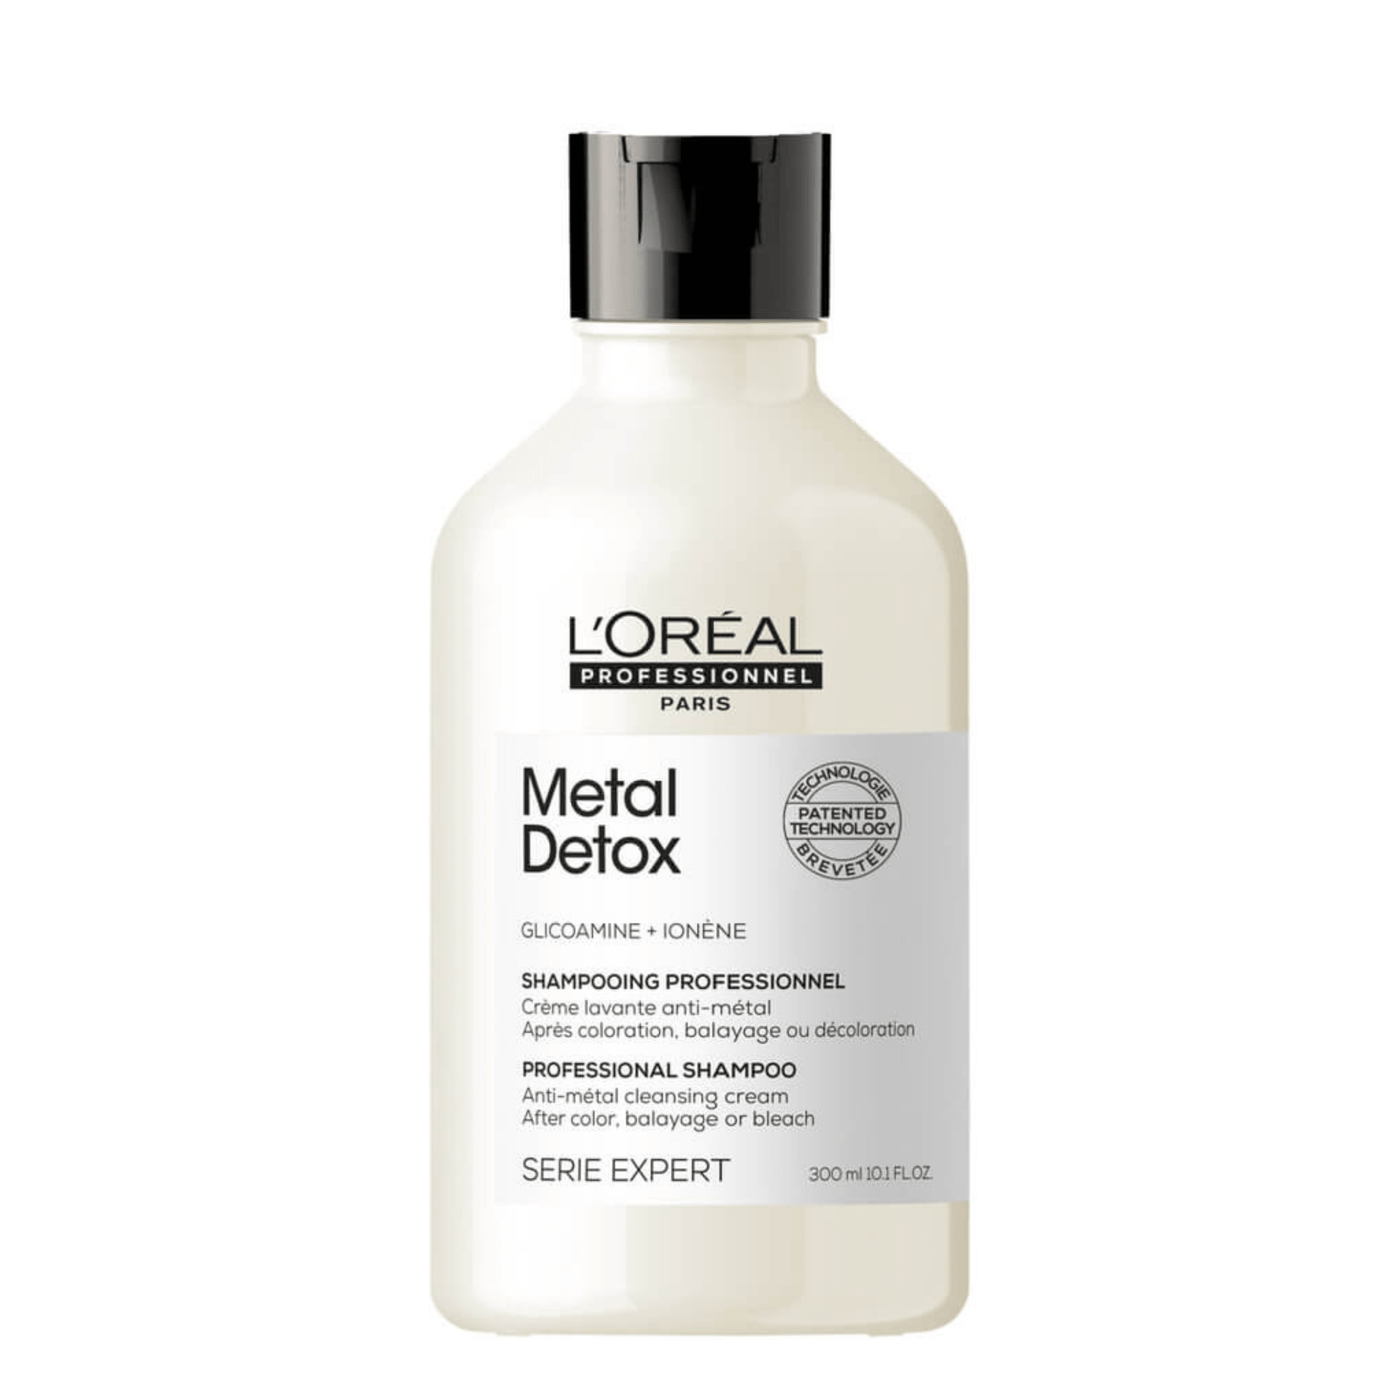 L'Oreal Professional Shampoo L'Oreal Professionnel Metal Detox Shampoo